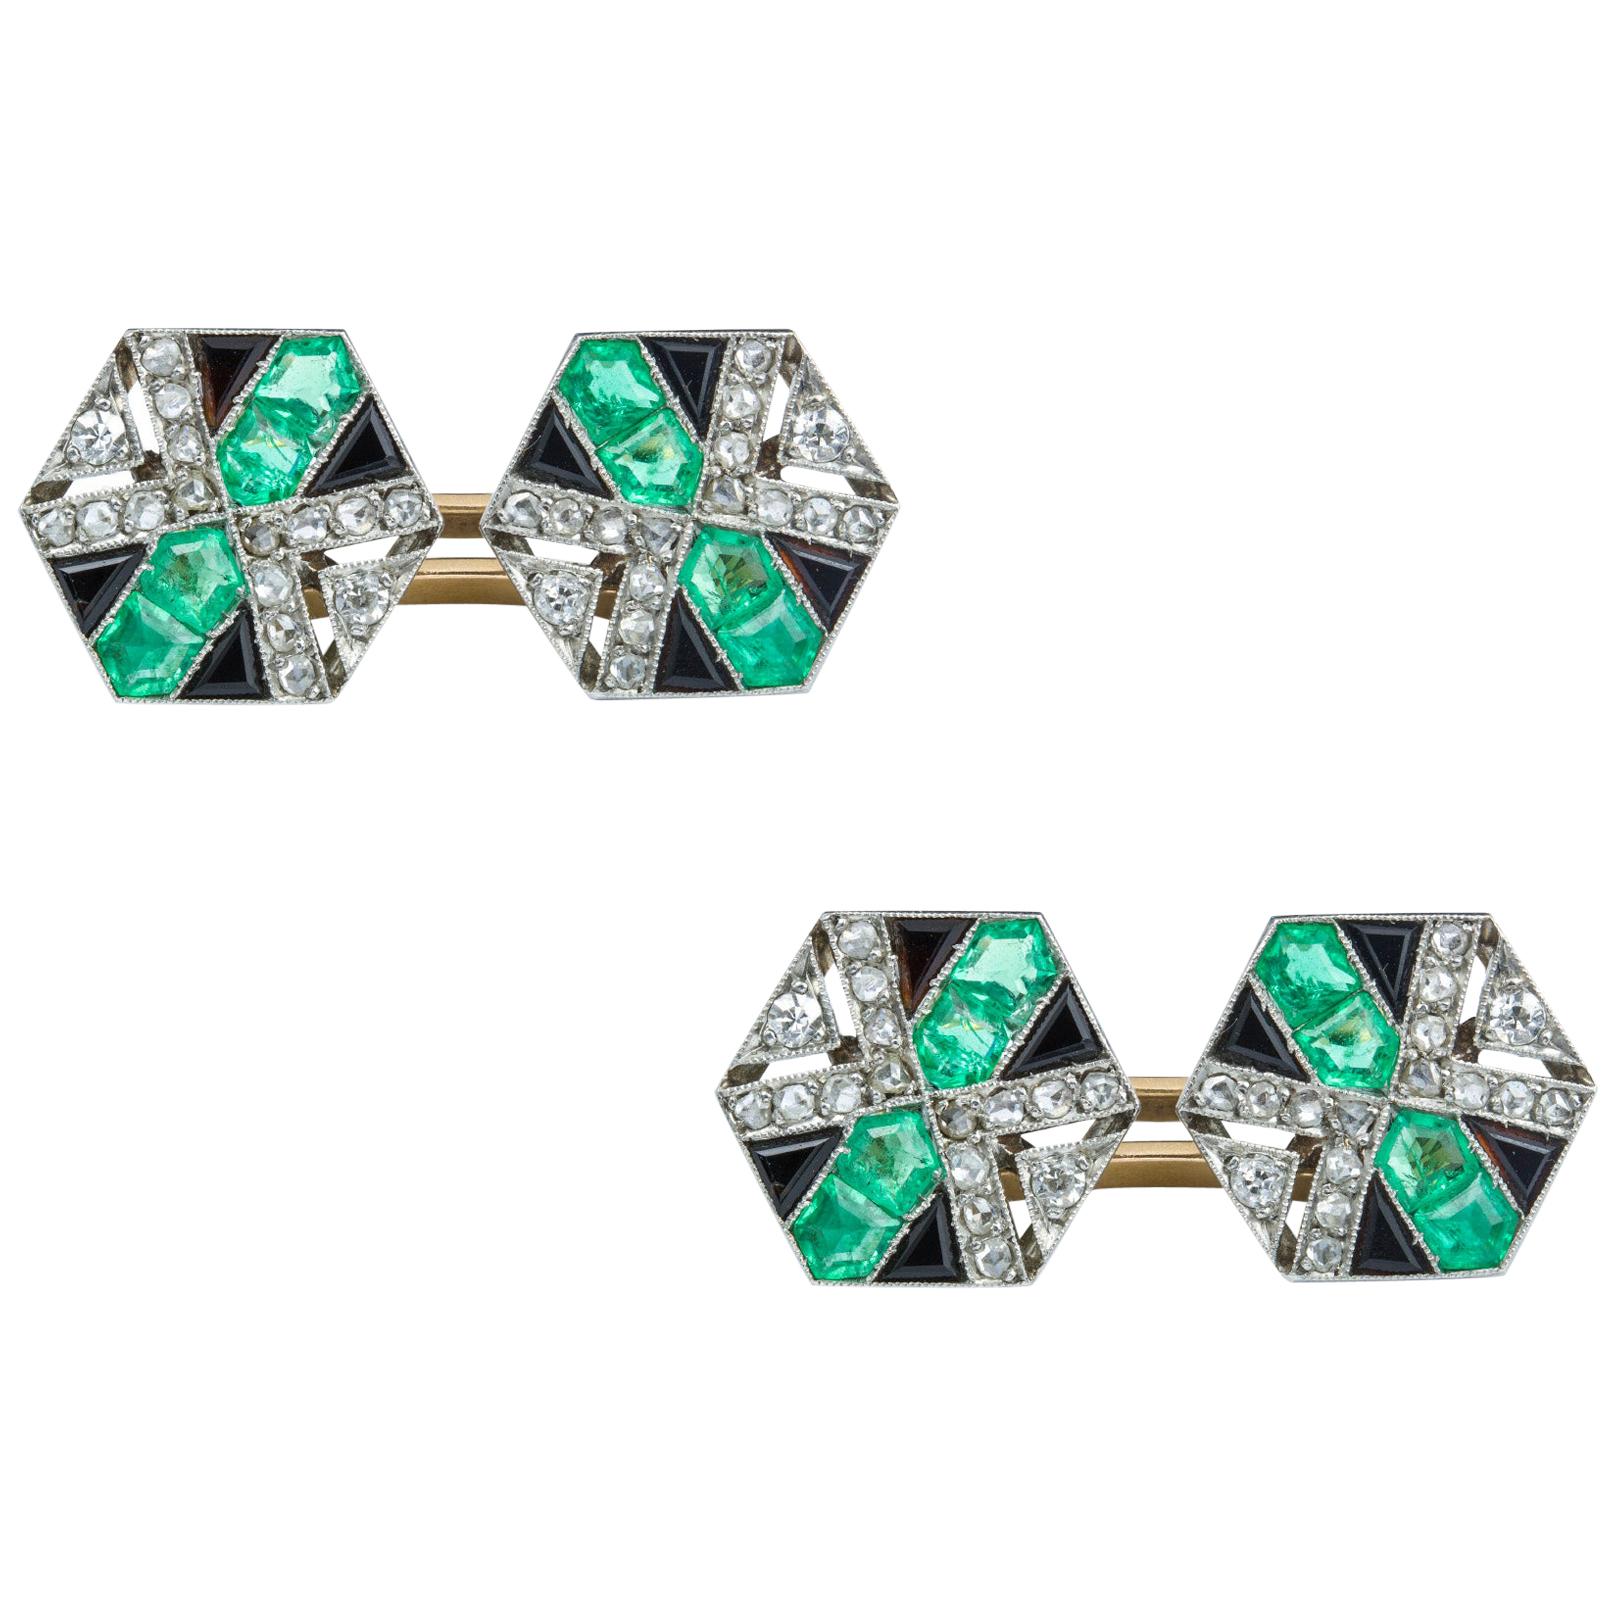 Pair of Art Deco Emerald, Diamond and Onyx Set Cufflinks